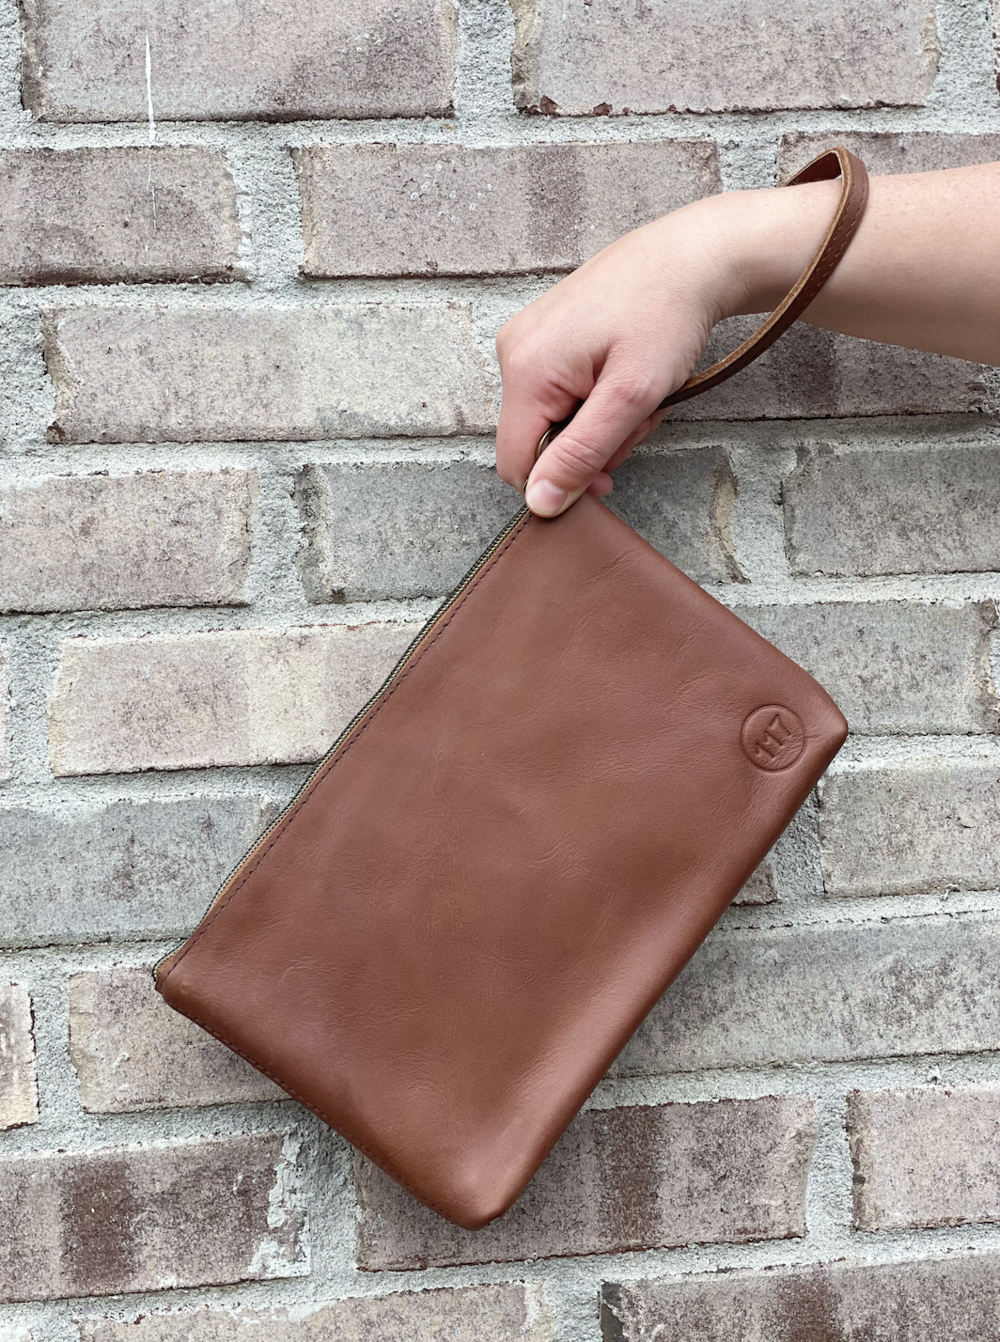 Checkered Wristlet Handbag with Detachable Leather Wristlet  (7315035)